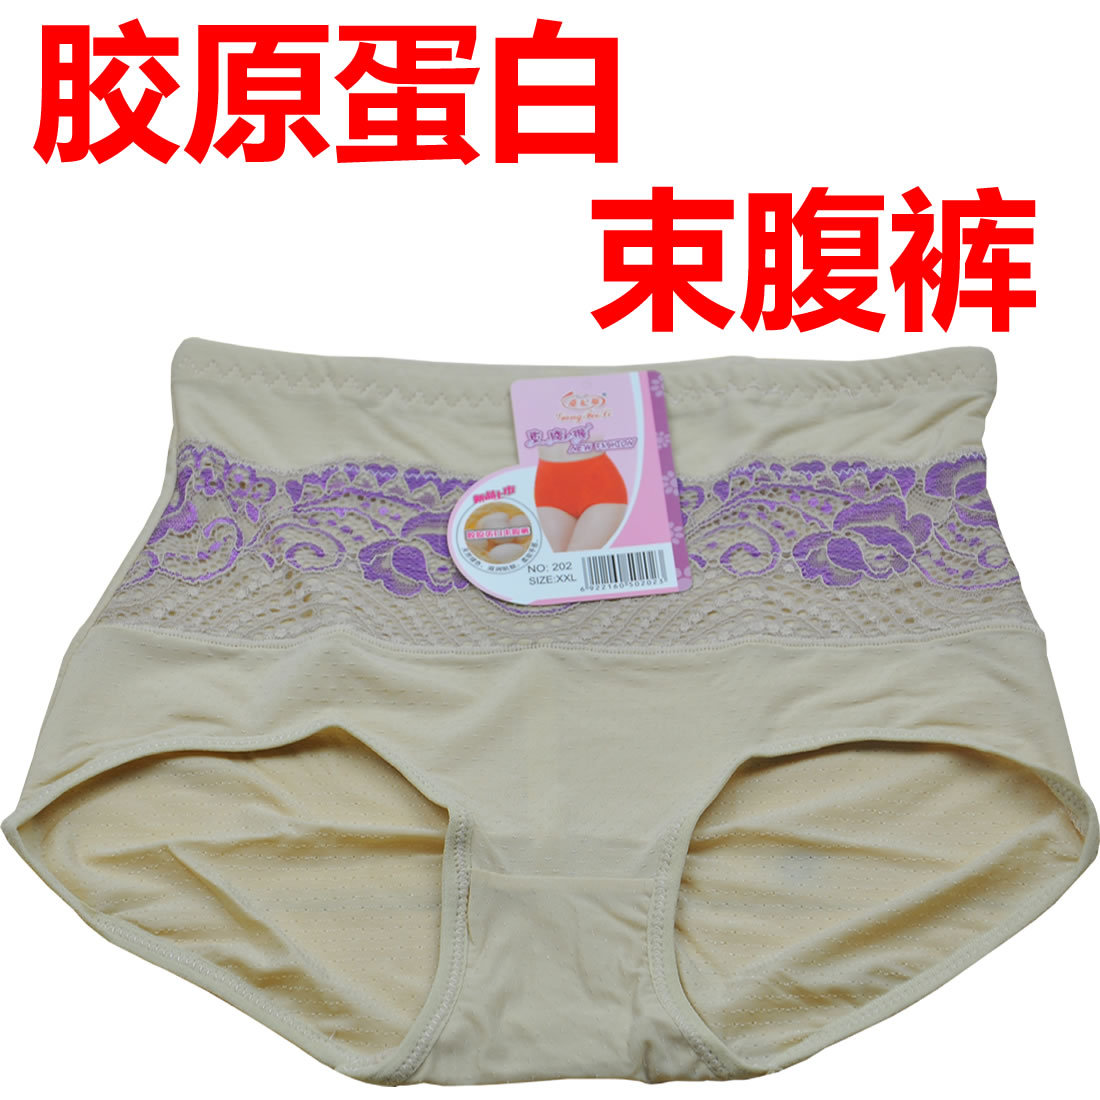 6 beauty care panties butt-lifting tiebelt panties women's trigonometric corselets high waist pants drawing abdomen pants